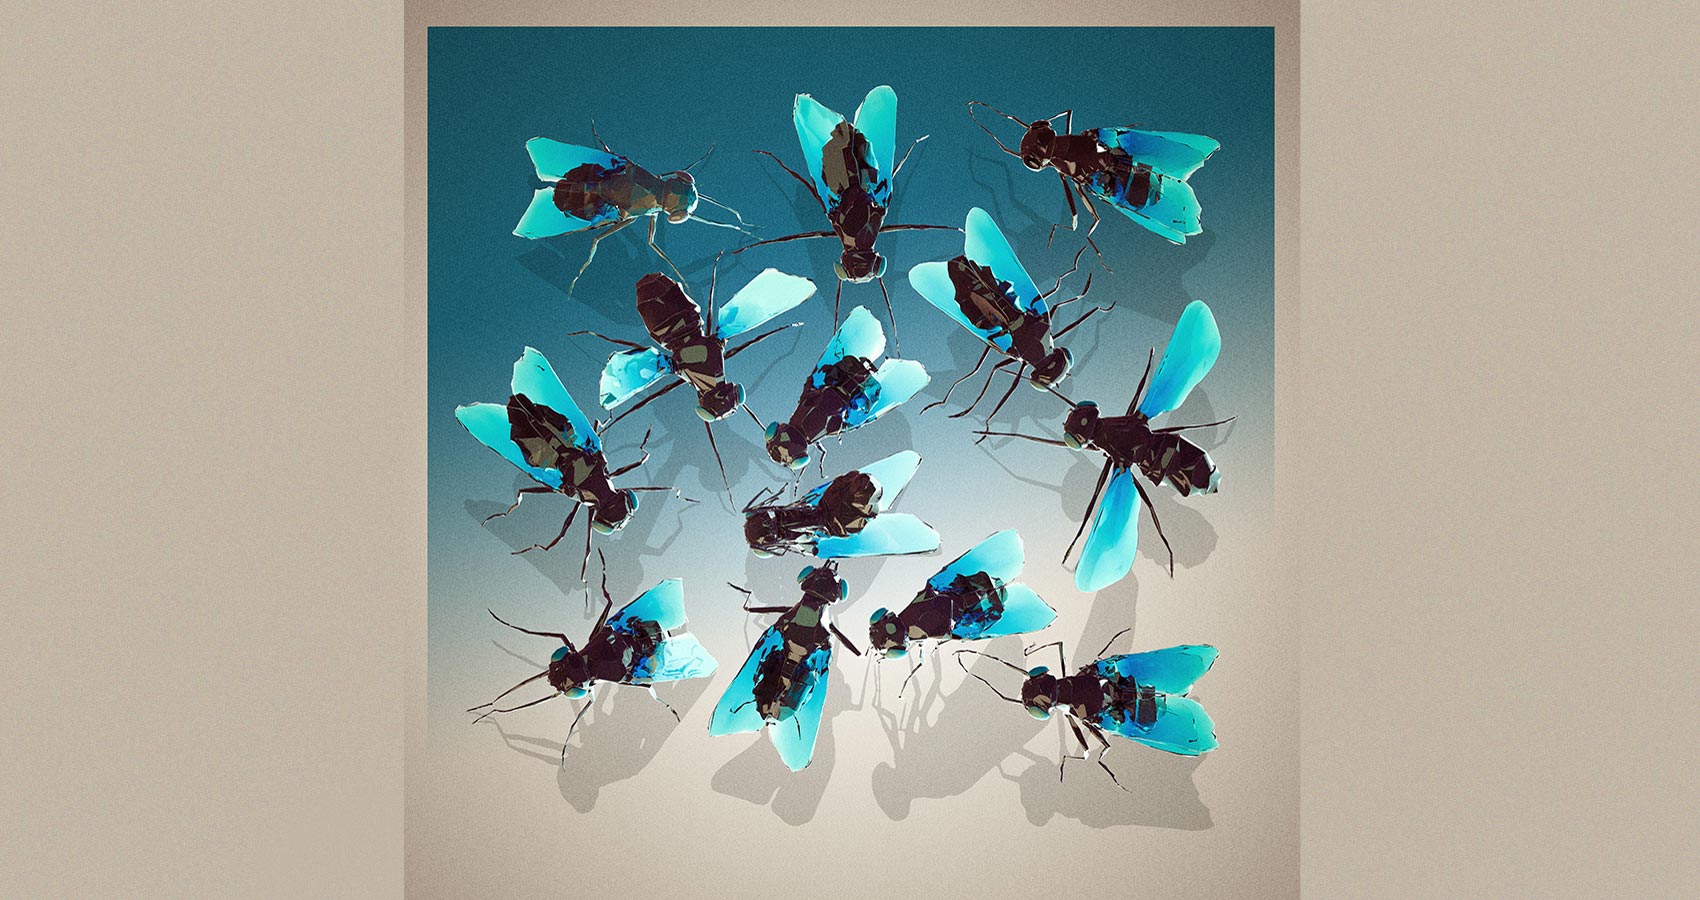 The Garden of Flies, a poem by Maciej Pająk (Matthew) at Spillwords.com